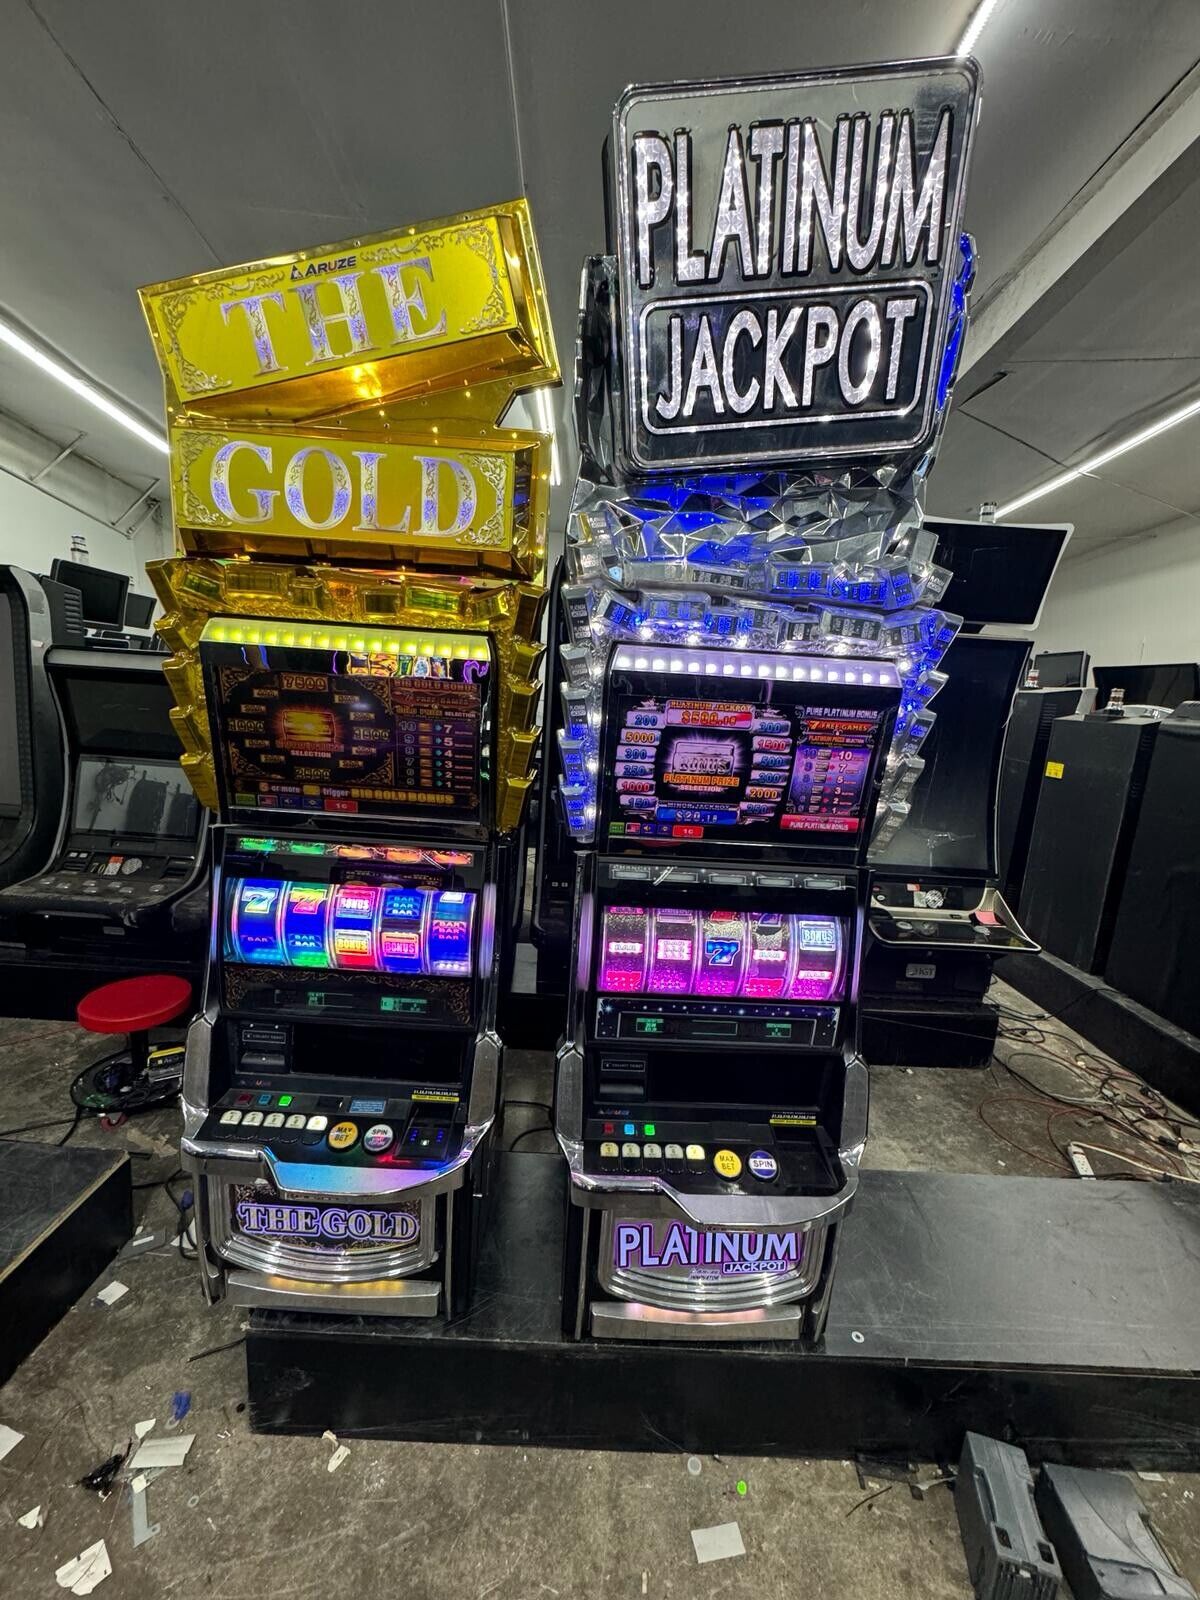 Aruze slot machine Platinum Jackpot